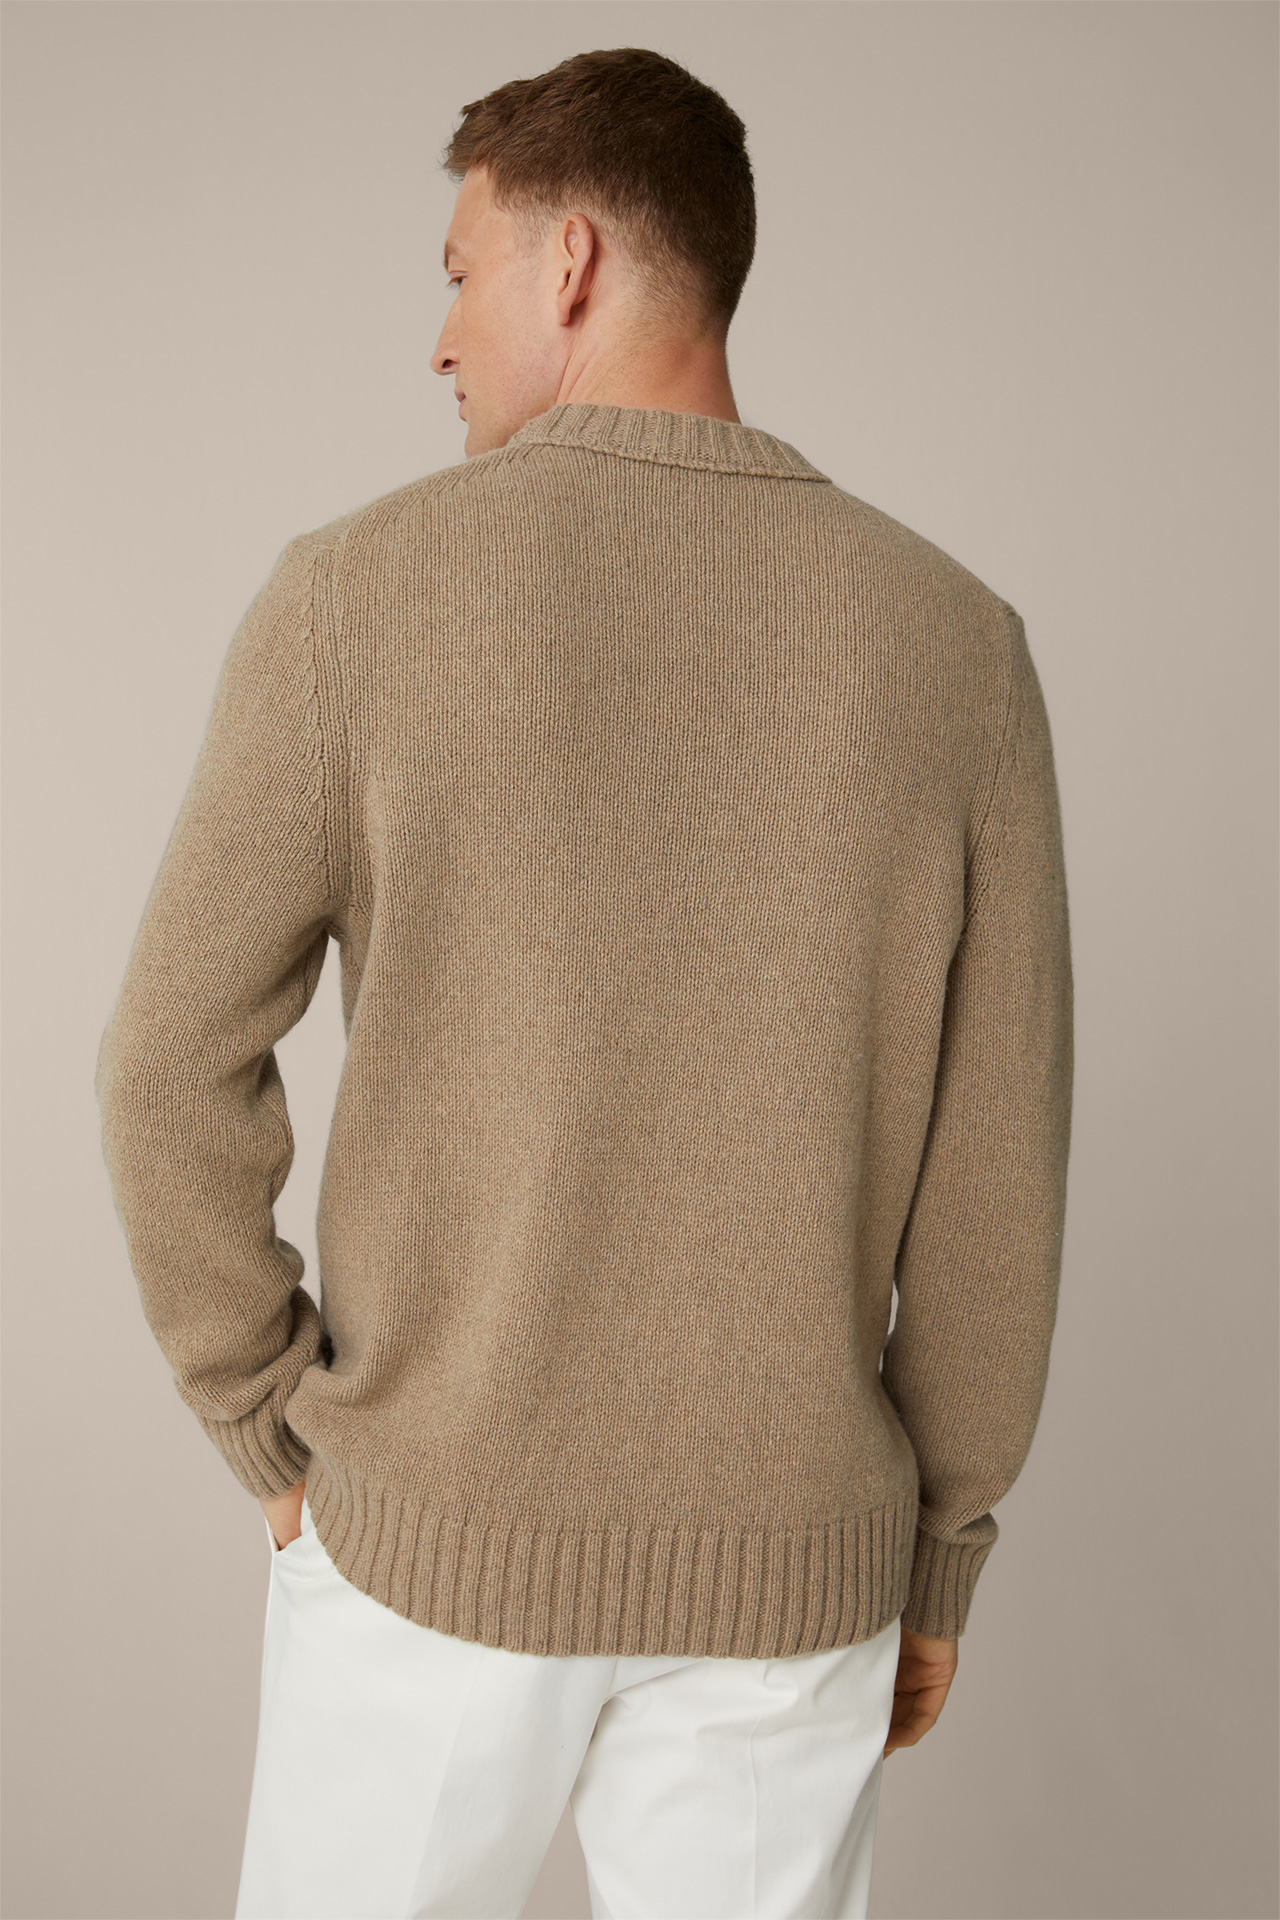 Ecosio Cashmere Knitted Round Neck Pullover in Beige